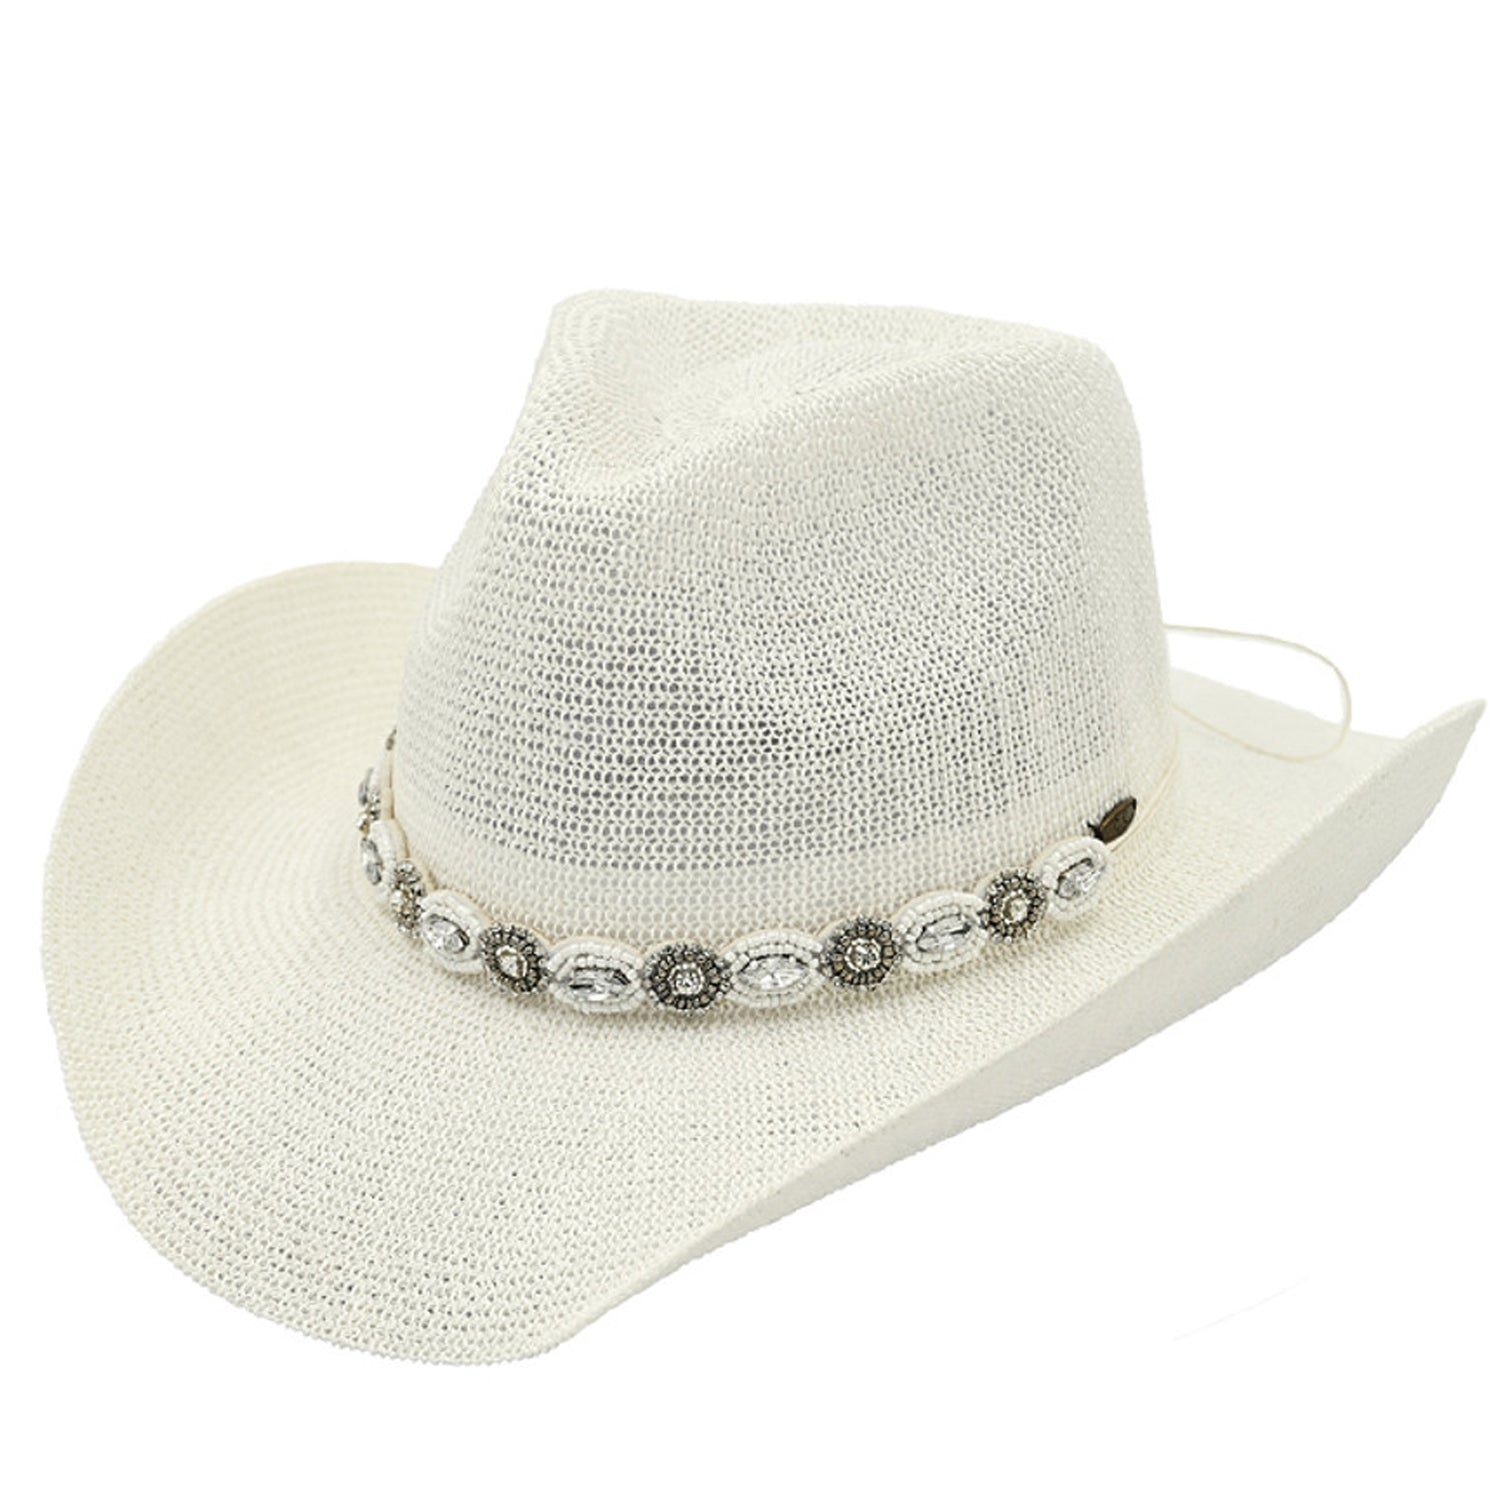 CBC-08 Cowgirl Hat White